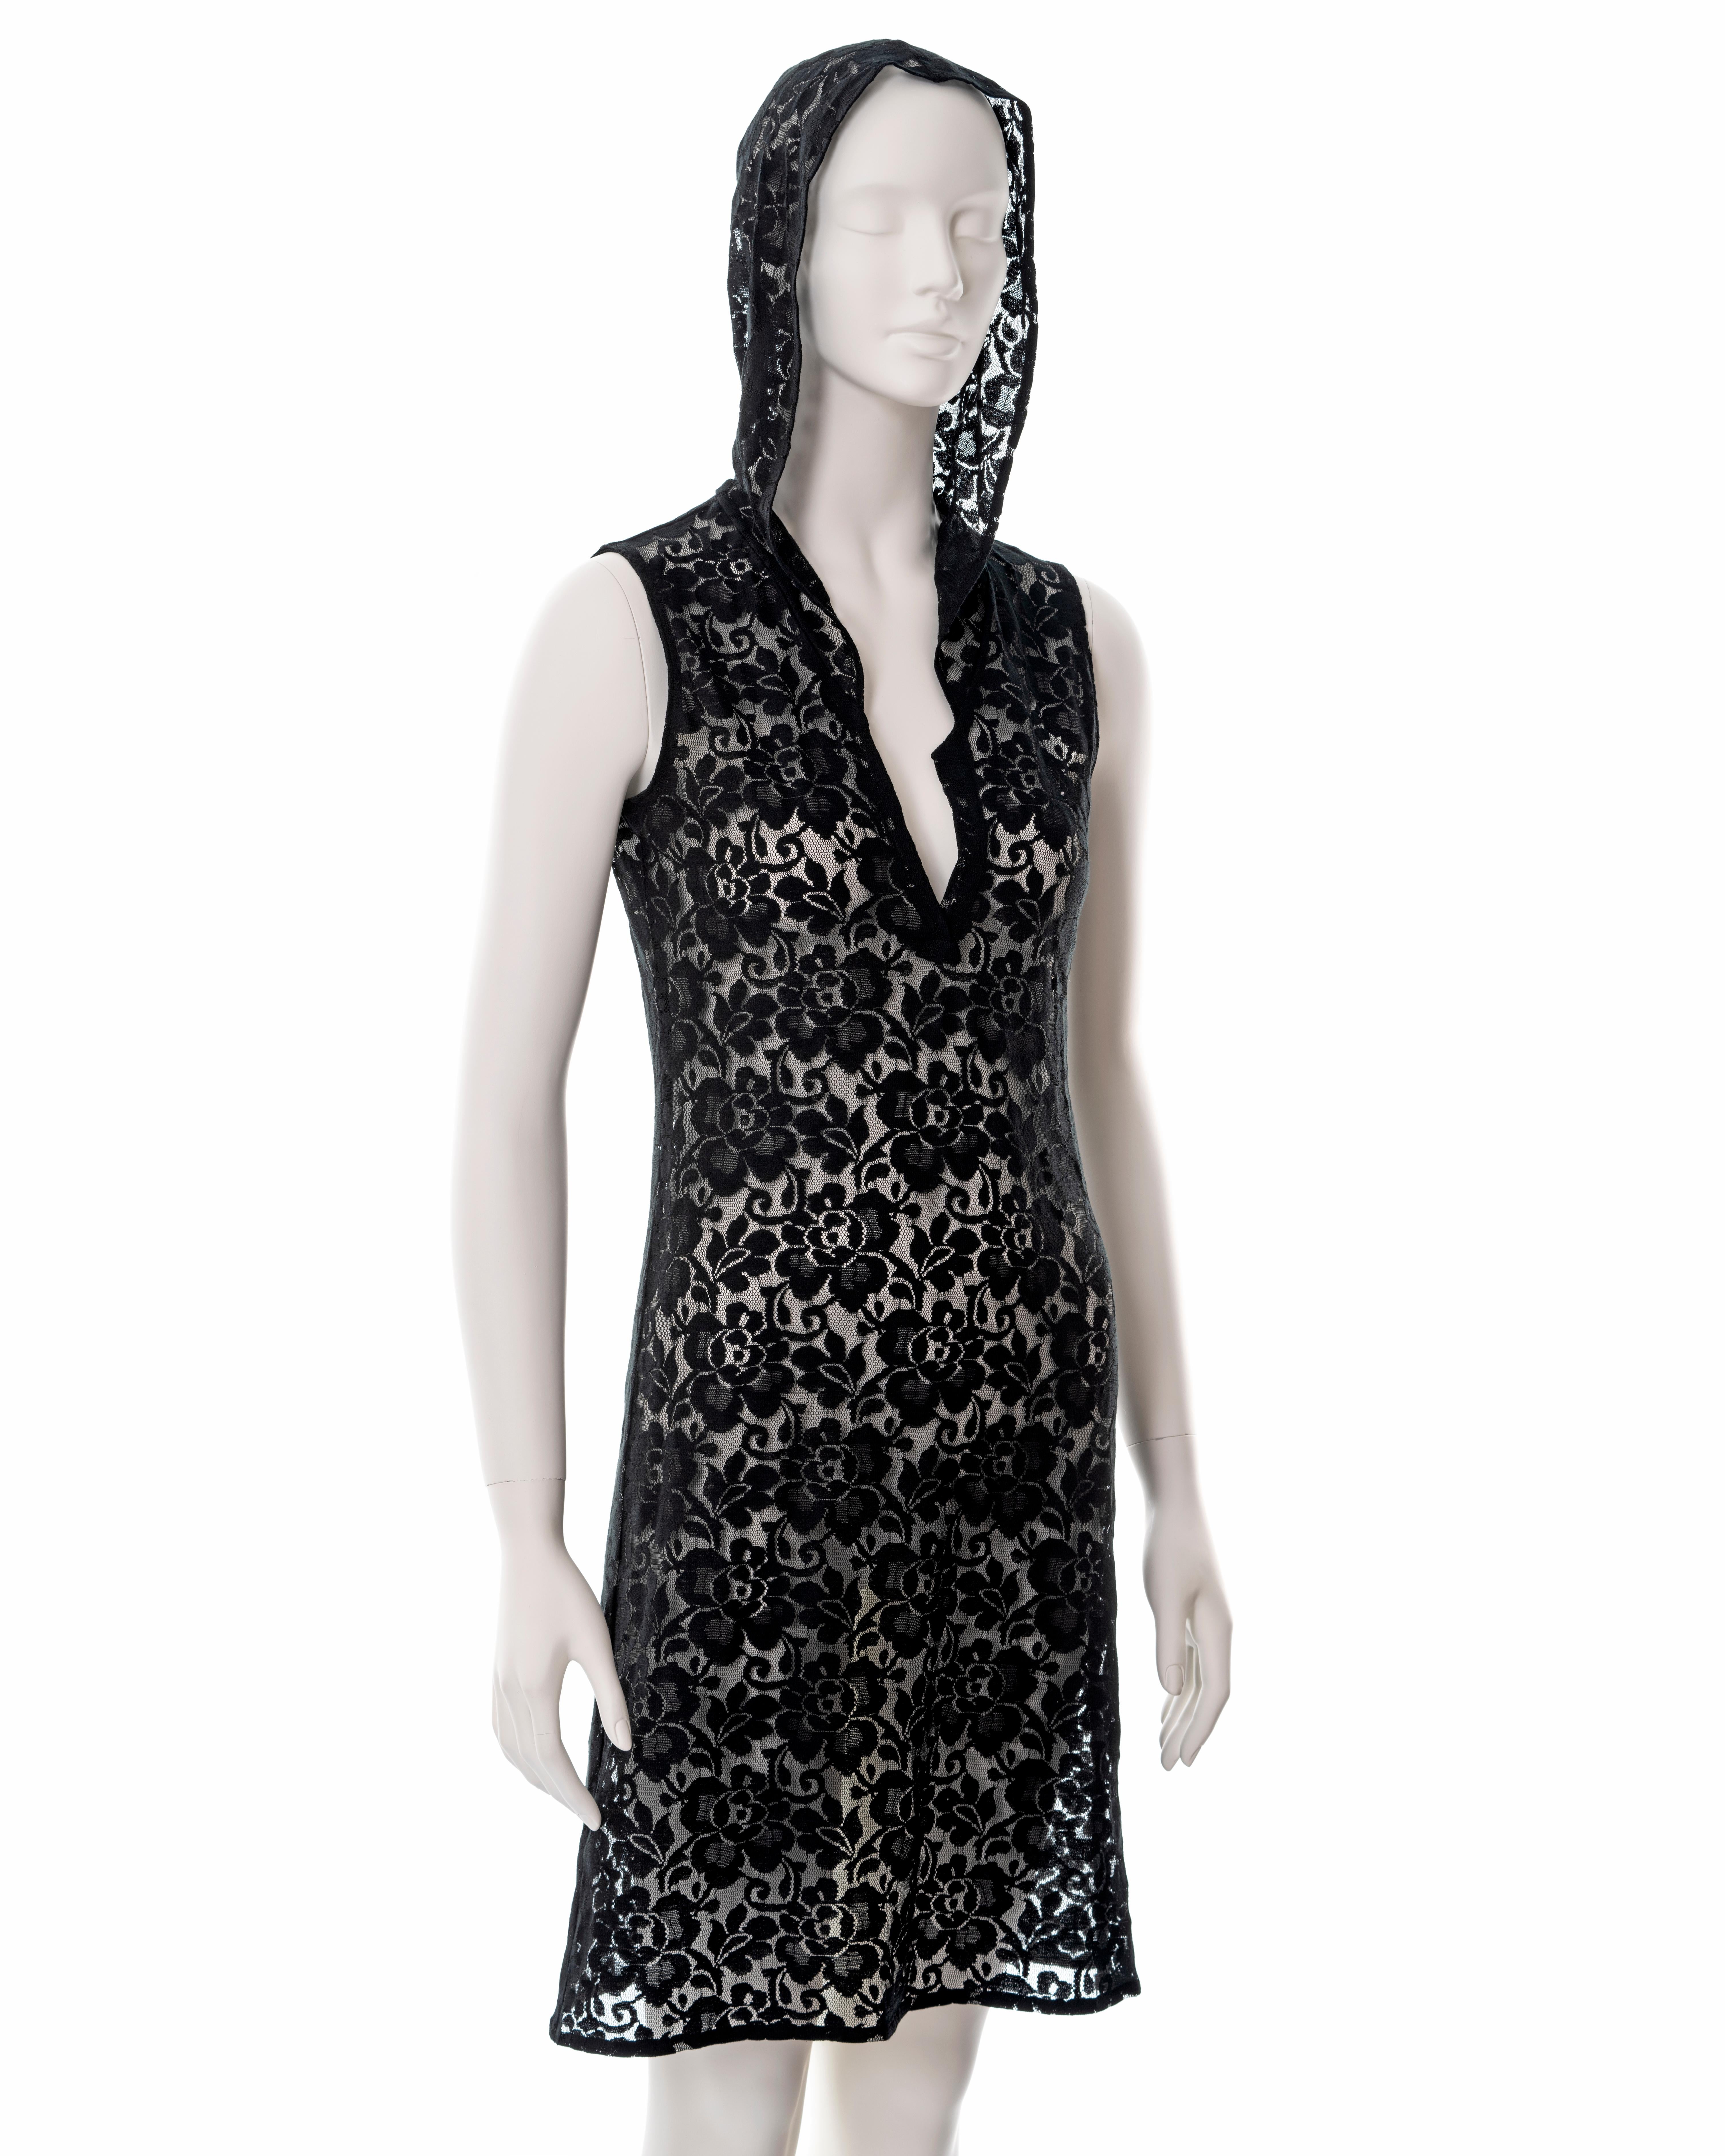 Helmut Lang black lace hooded shift dress, ss 1996 For Sale 1